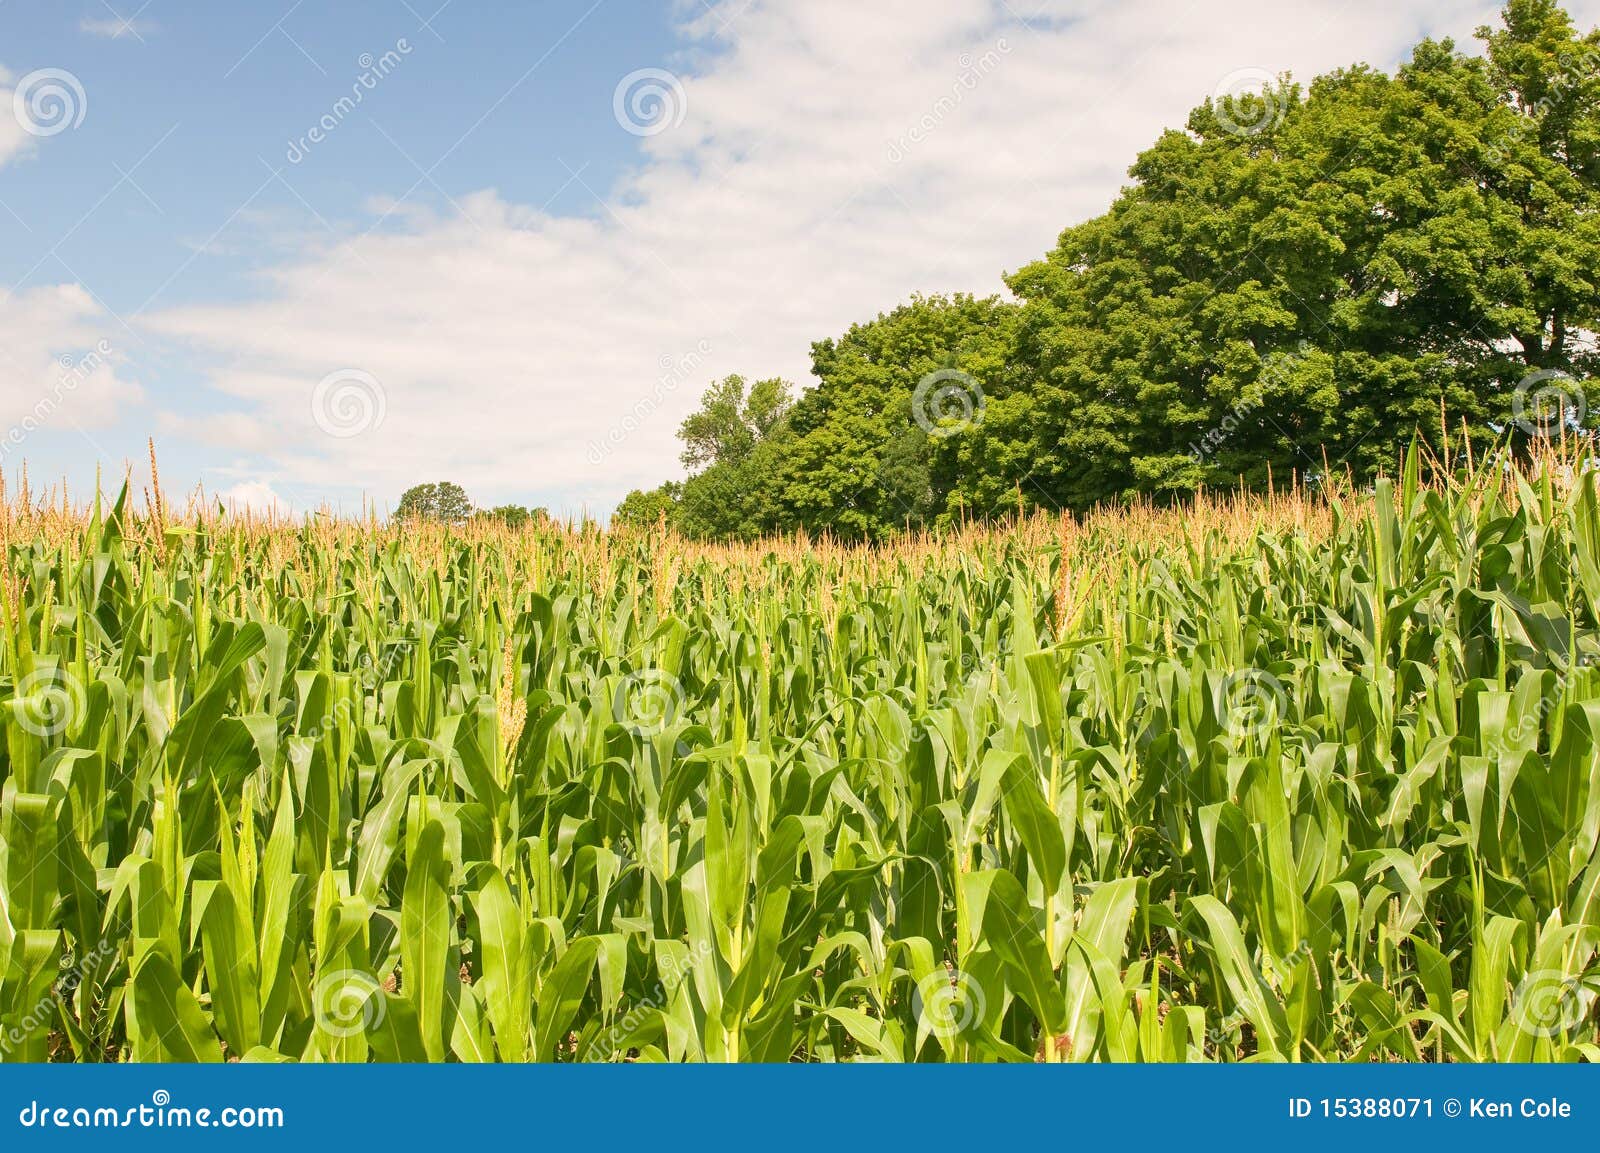 country cornfield